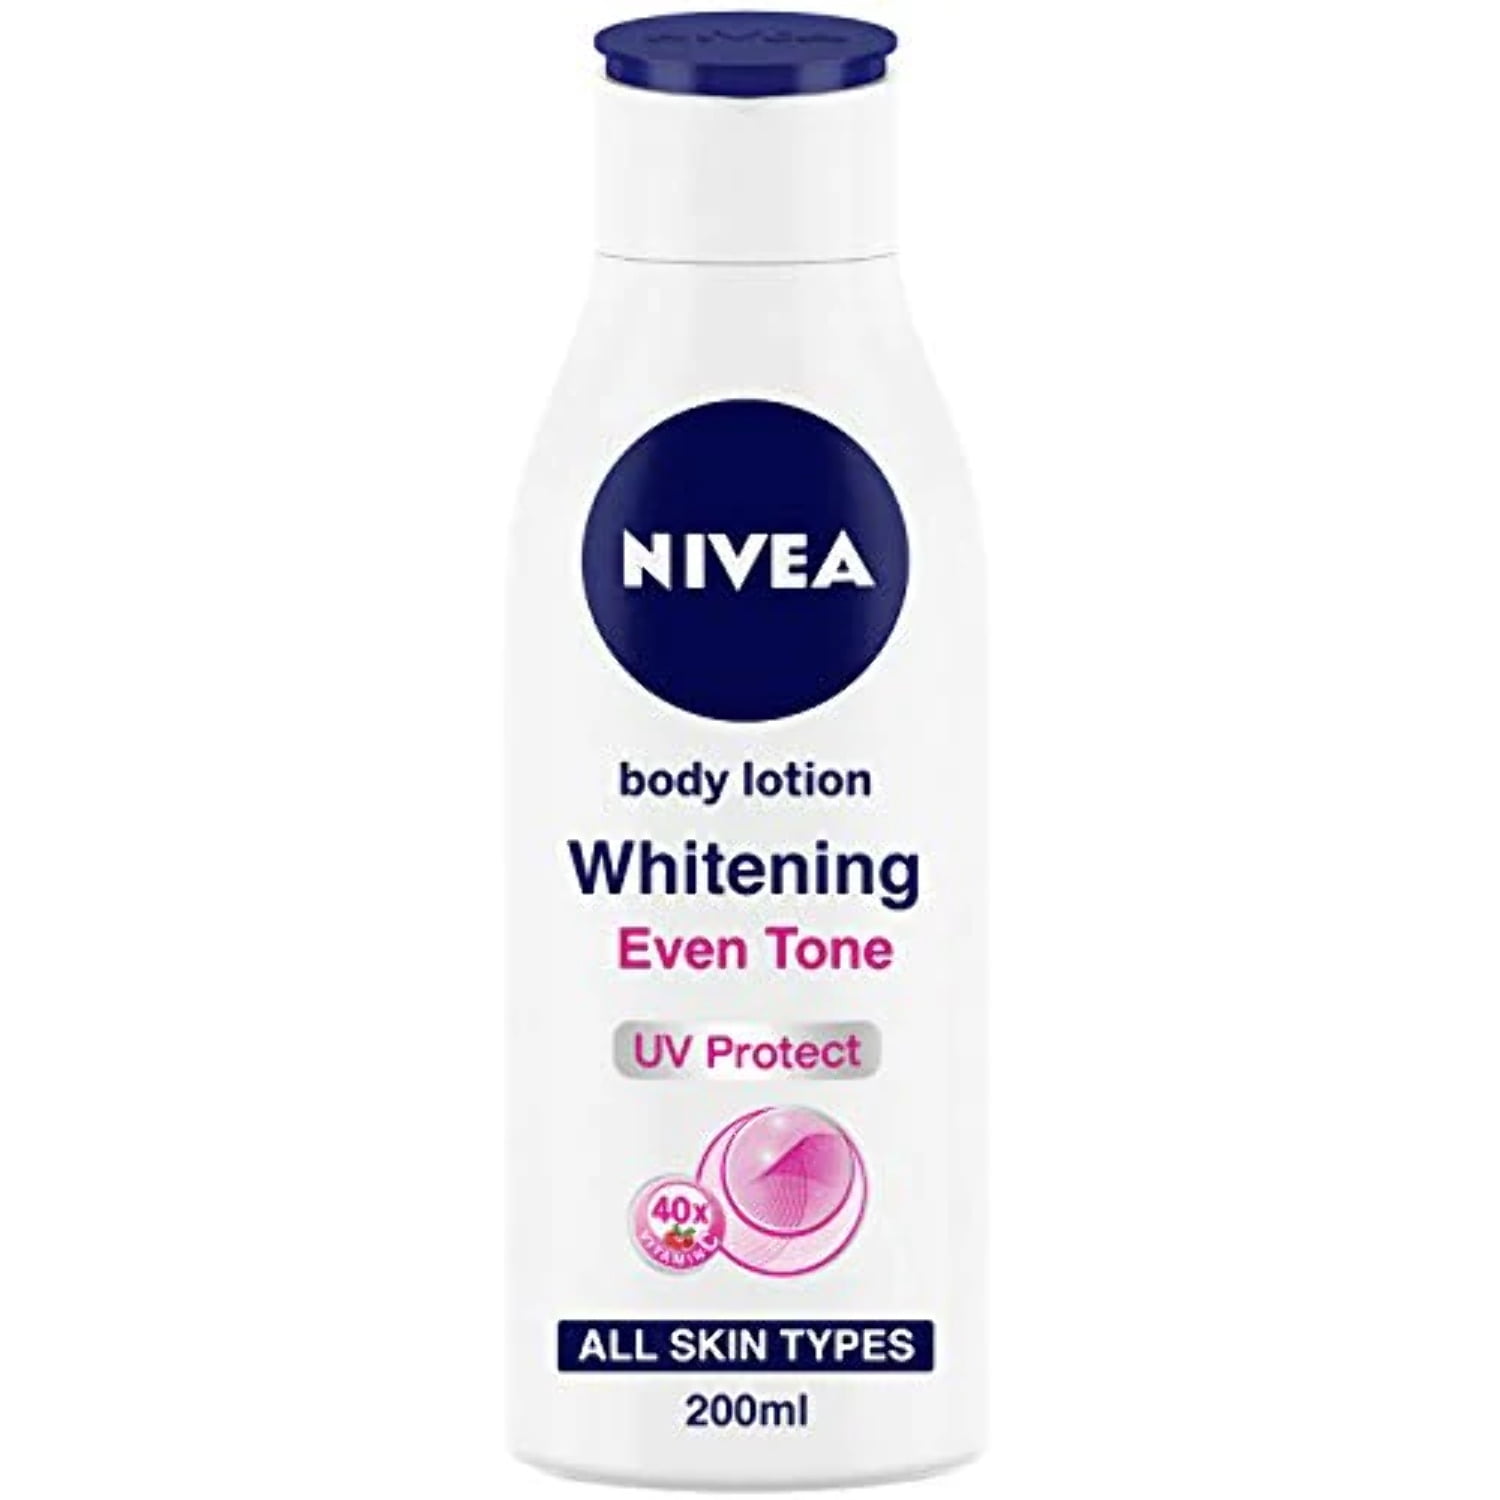 conservatief leraar Vel NIVEA Body Lotion, Whitening Even Tone, UV Protect 40x Vitamin C, 200 ml -  Walmart.com